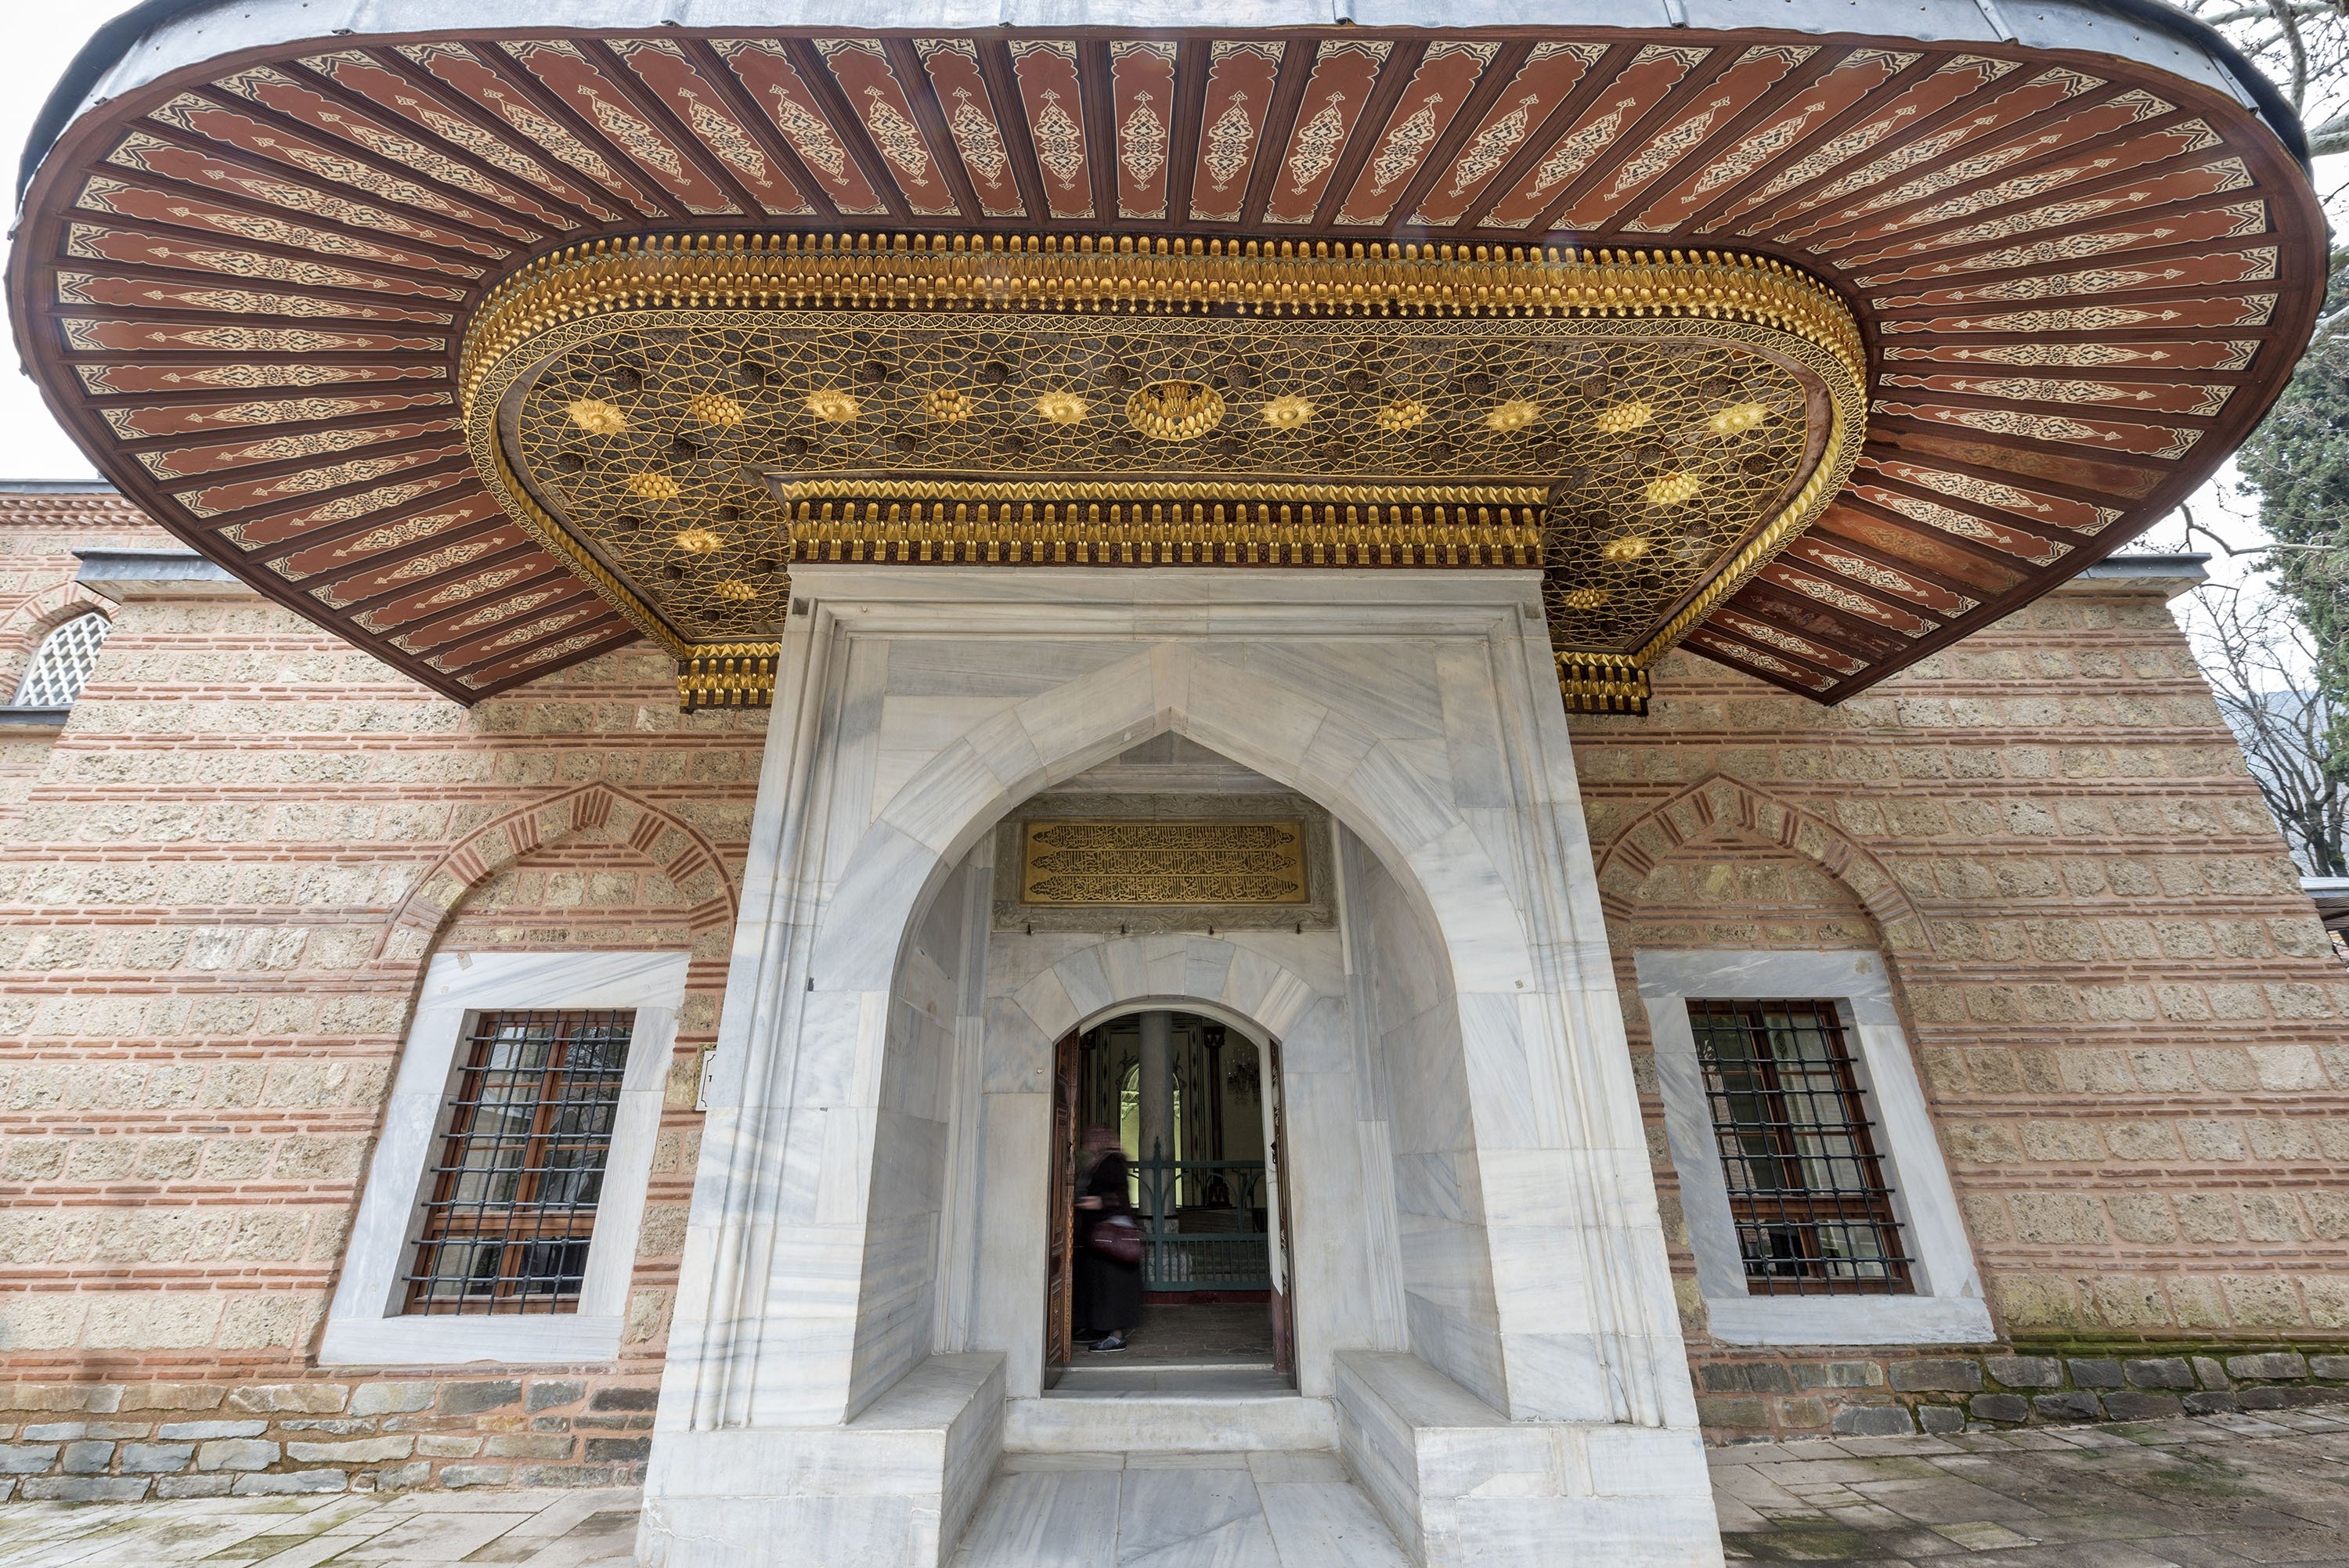 The entrance of the Sultan Murad II Tomb, Bursa, northwestern Turkey. 